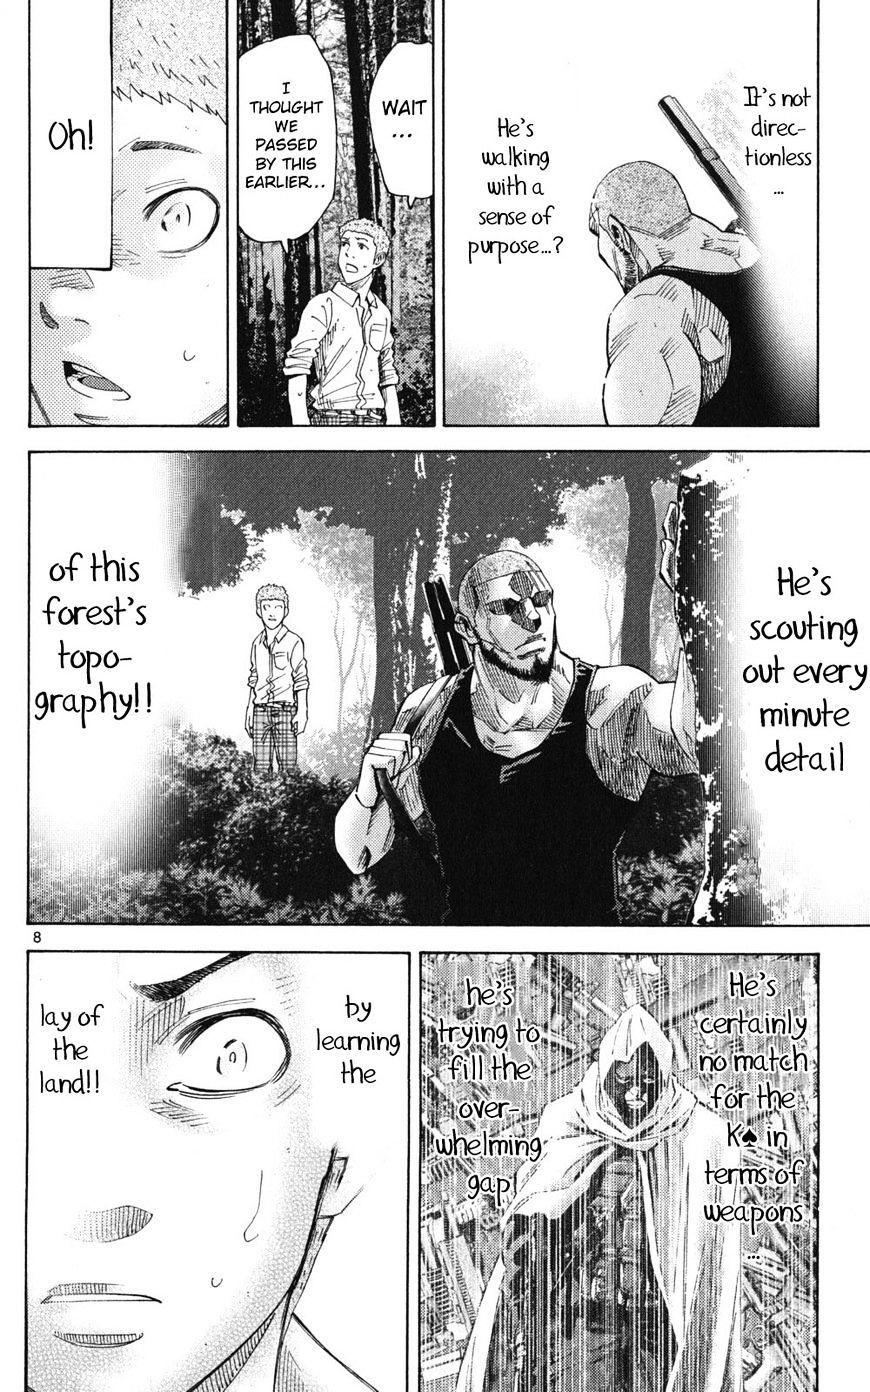 Imawa No Kuni No Alice Chapter 49.2 : Side Story 5 - King Of Spades (2) page 8 - Mangakakalot